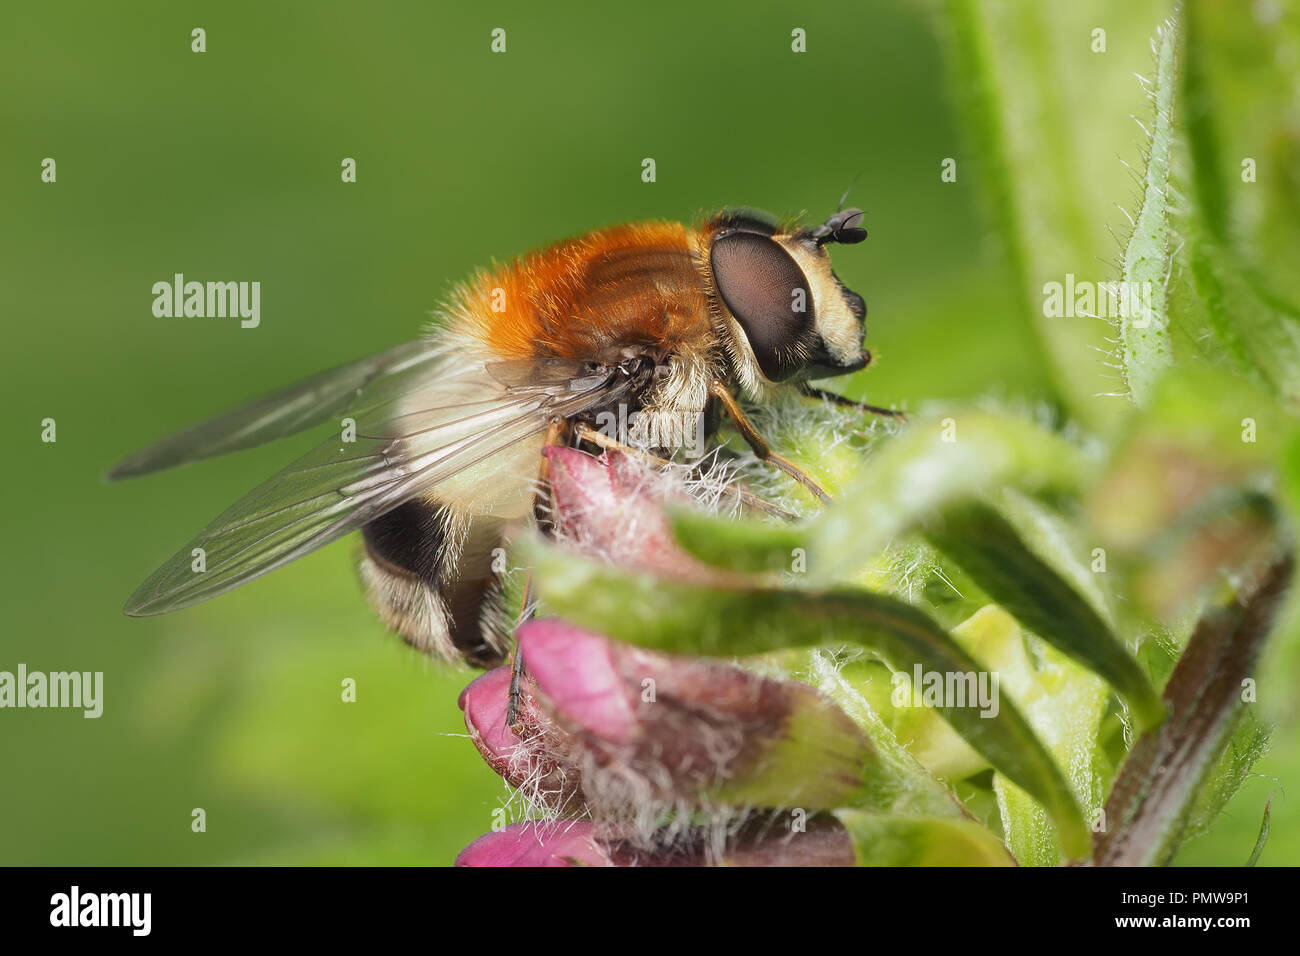 Leucozona lucorum hoverfly perché sur plante. Tipperary, Irlande Banque D'Images